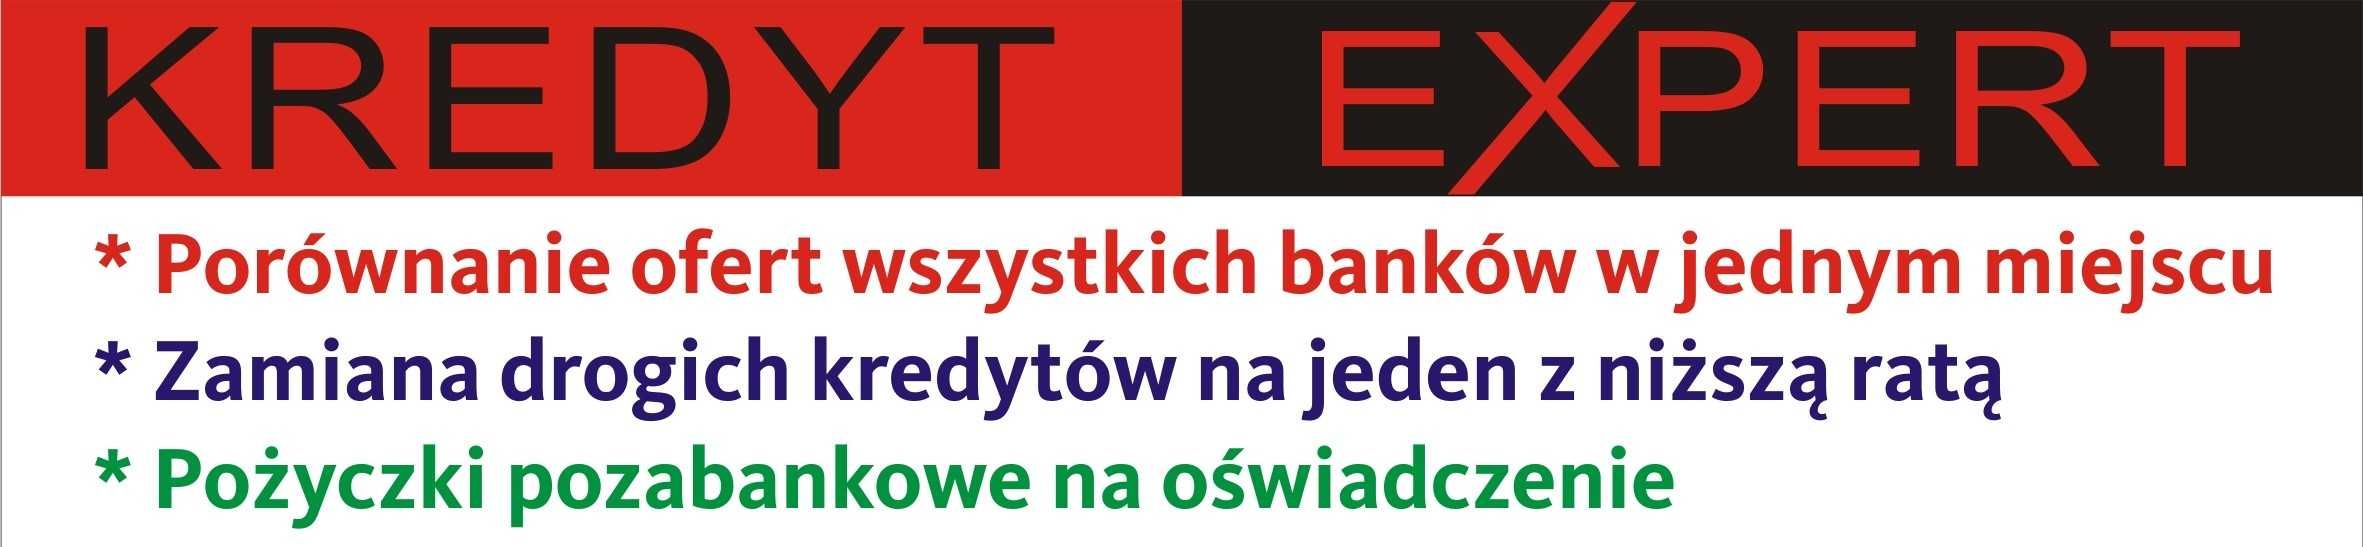 Kredyt na spłatę zaległości, obniżanie rat Kredyt Expert Lublin